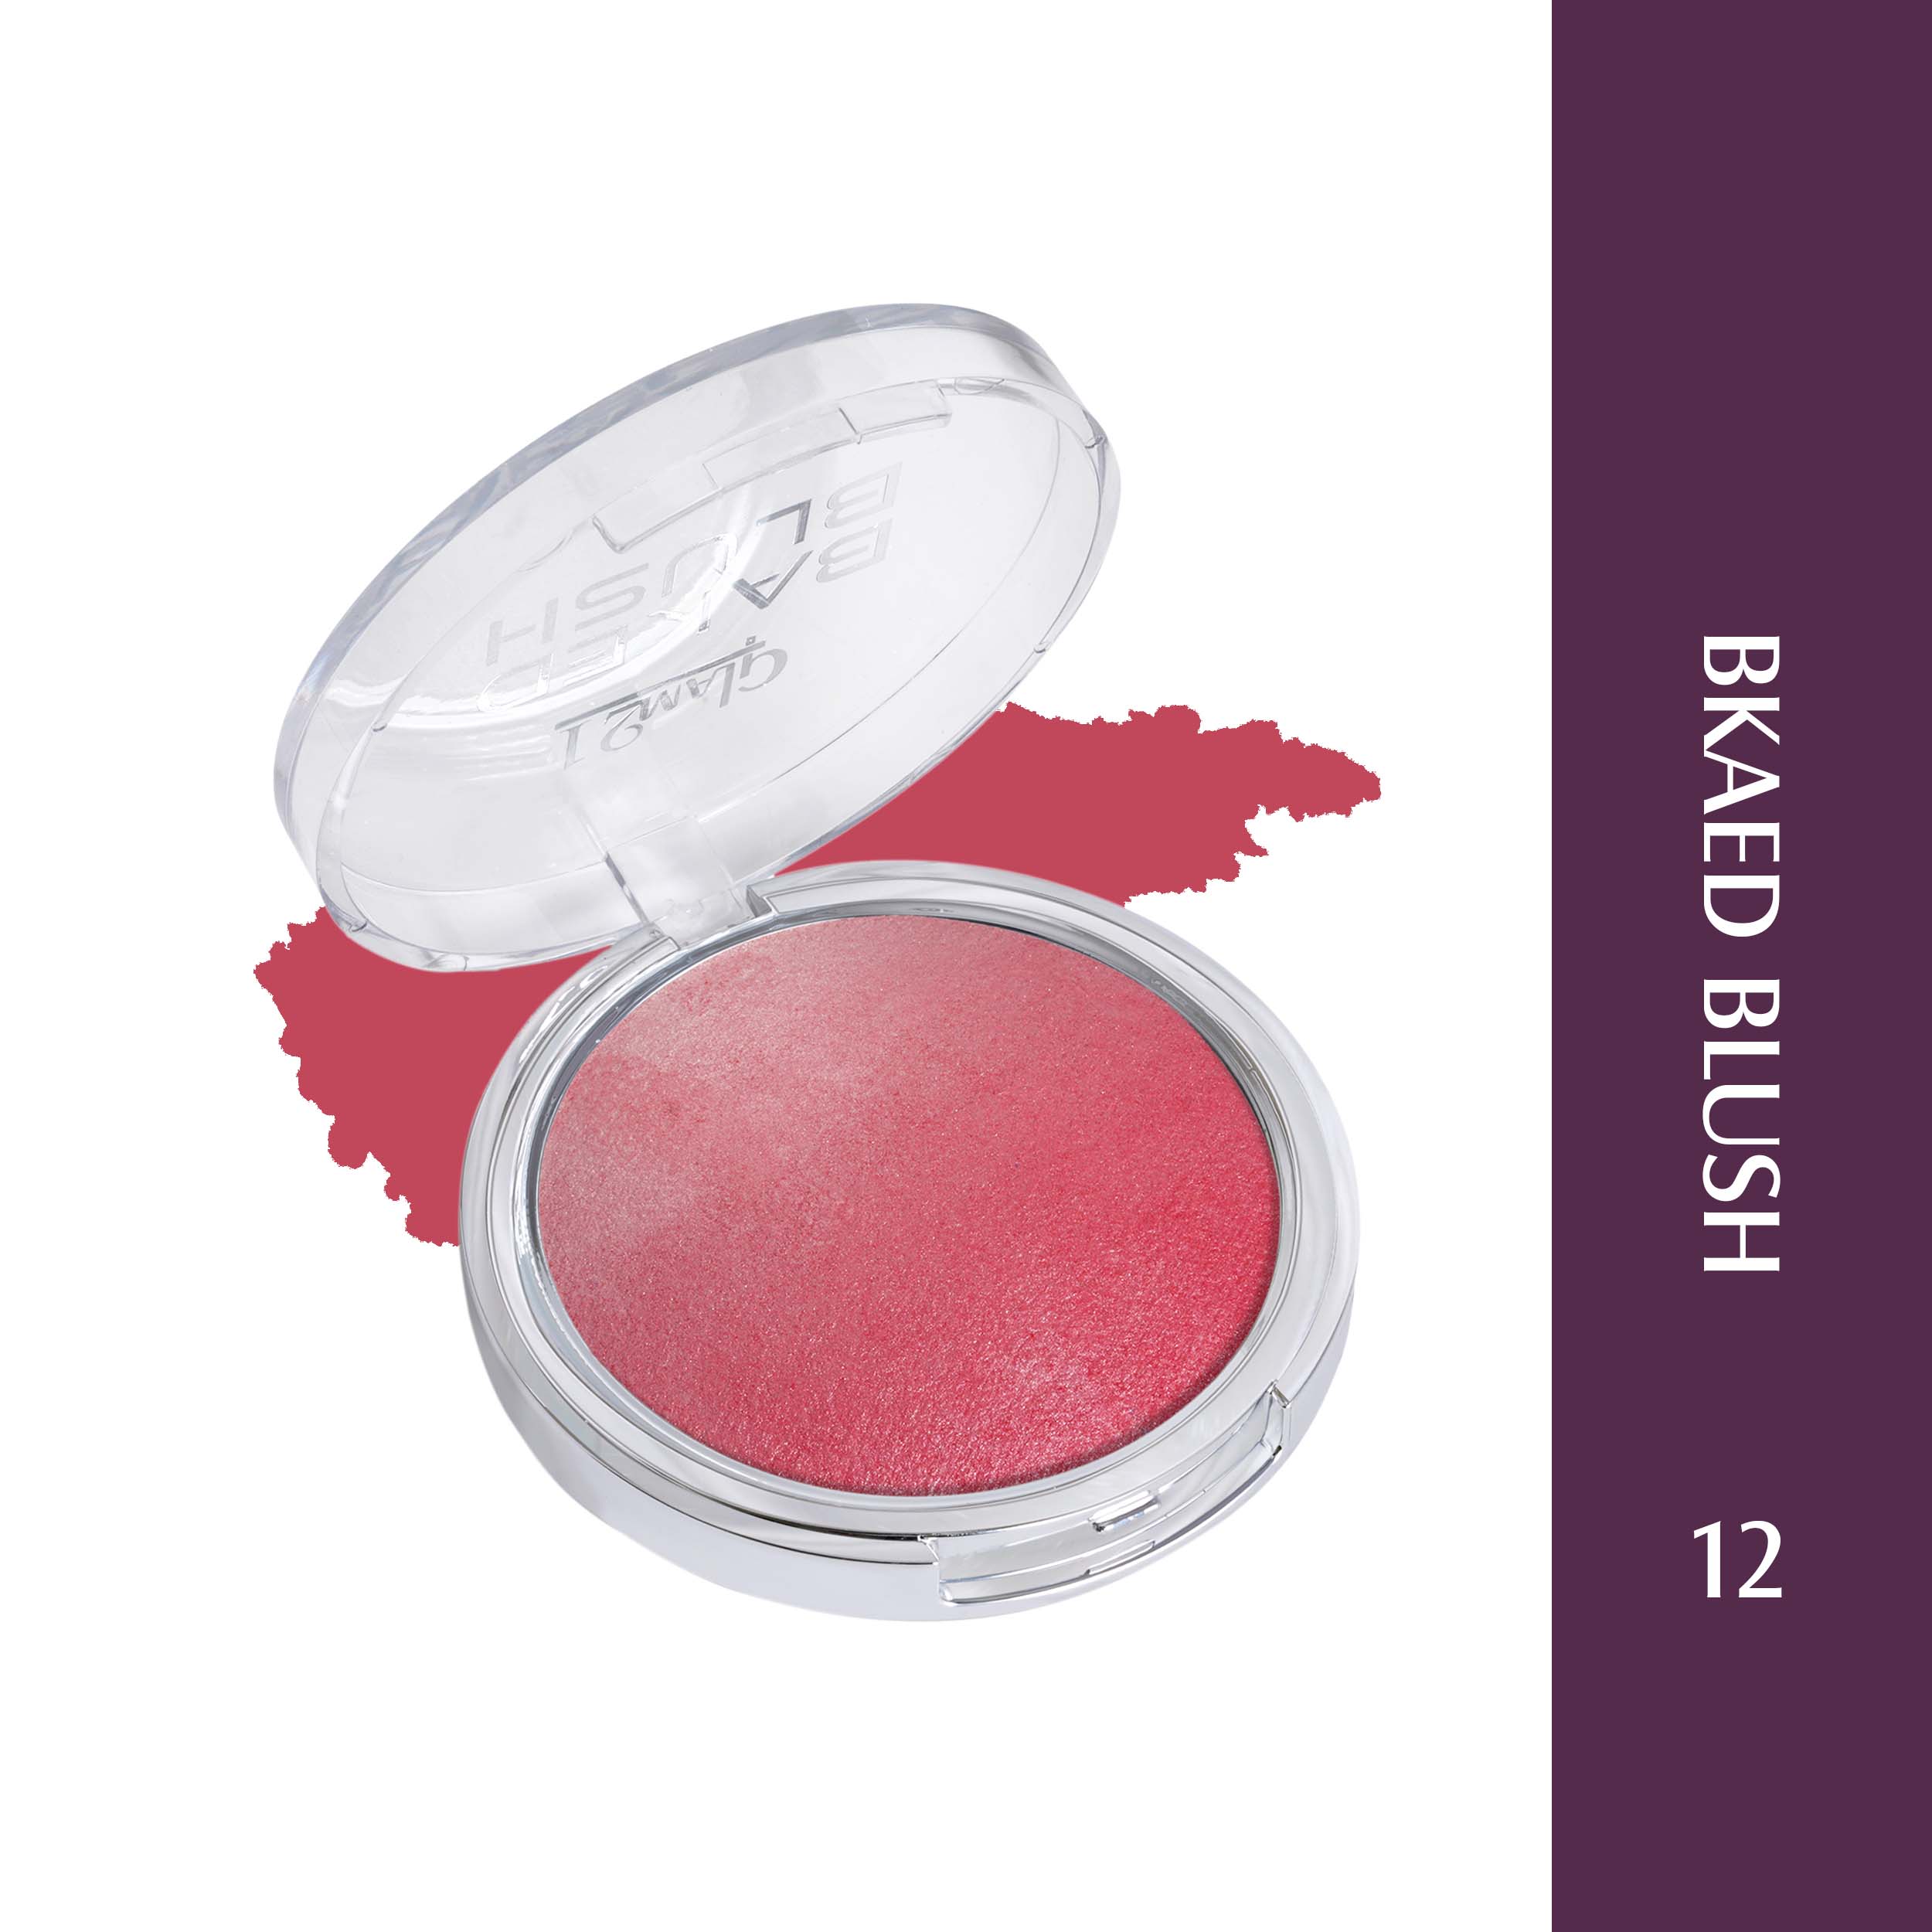 Glam21 Baked Blush Highly Pigmented Formula, Long-Lasting, Illuminating Texture, 6g (Shade-12)